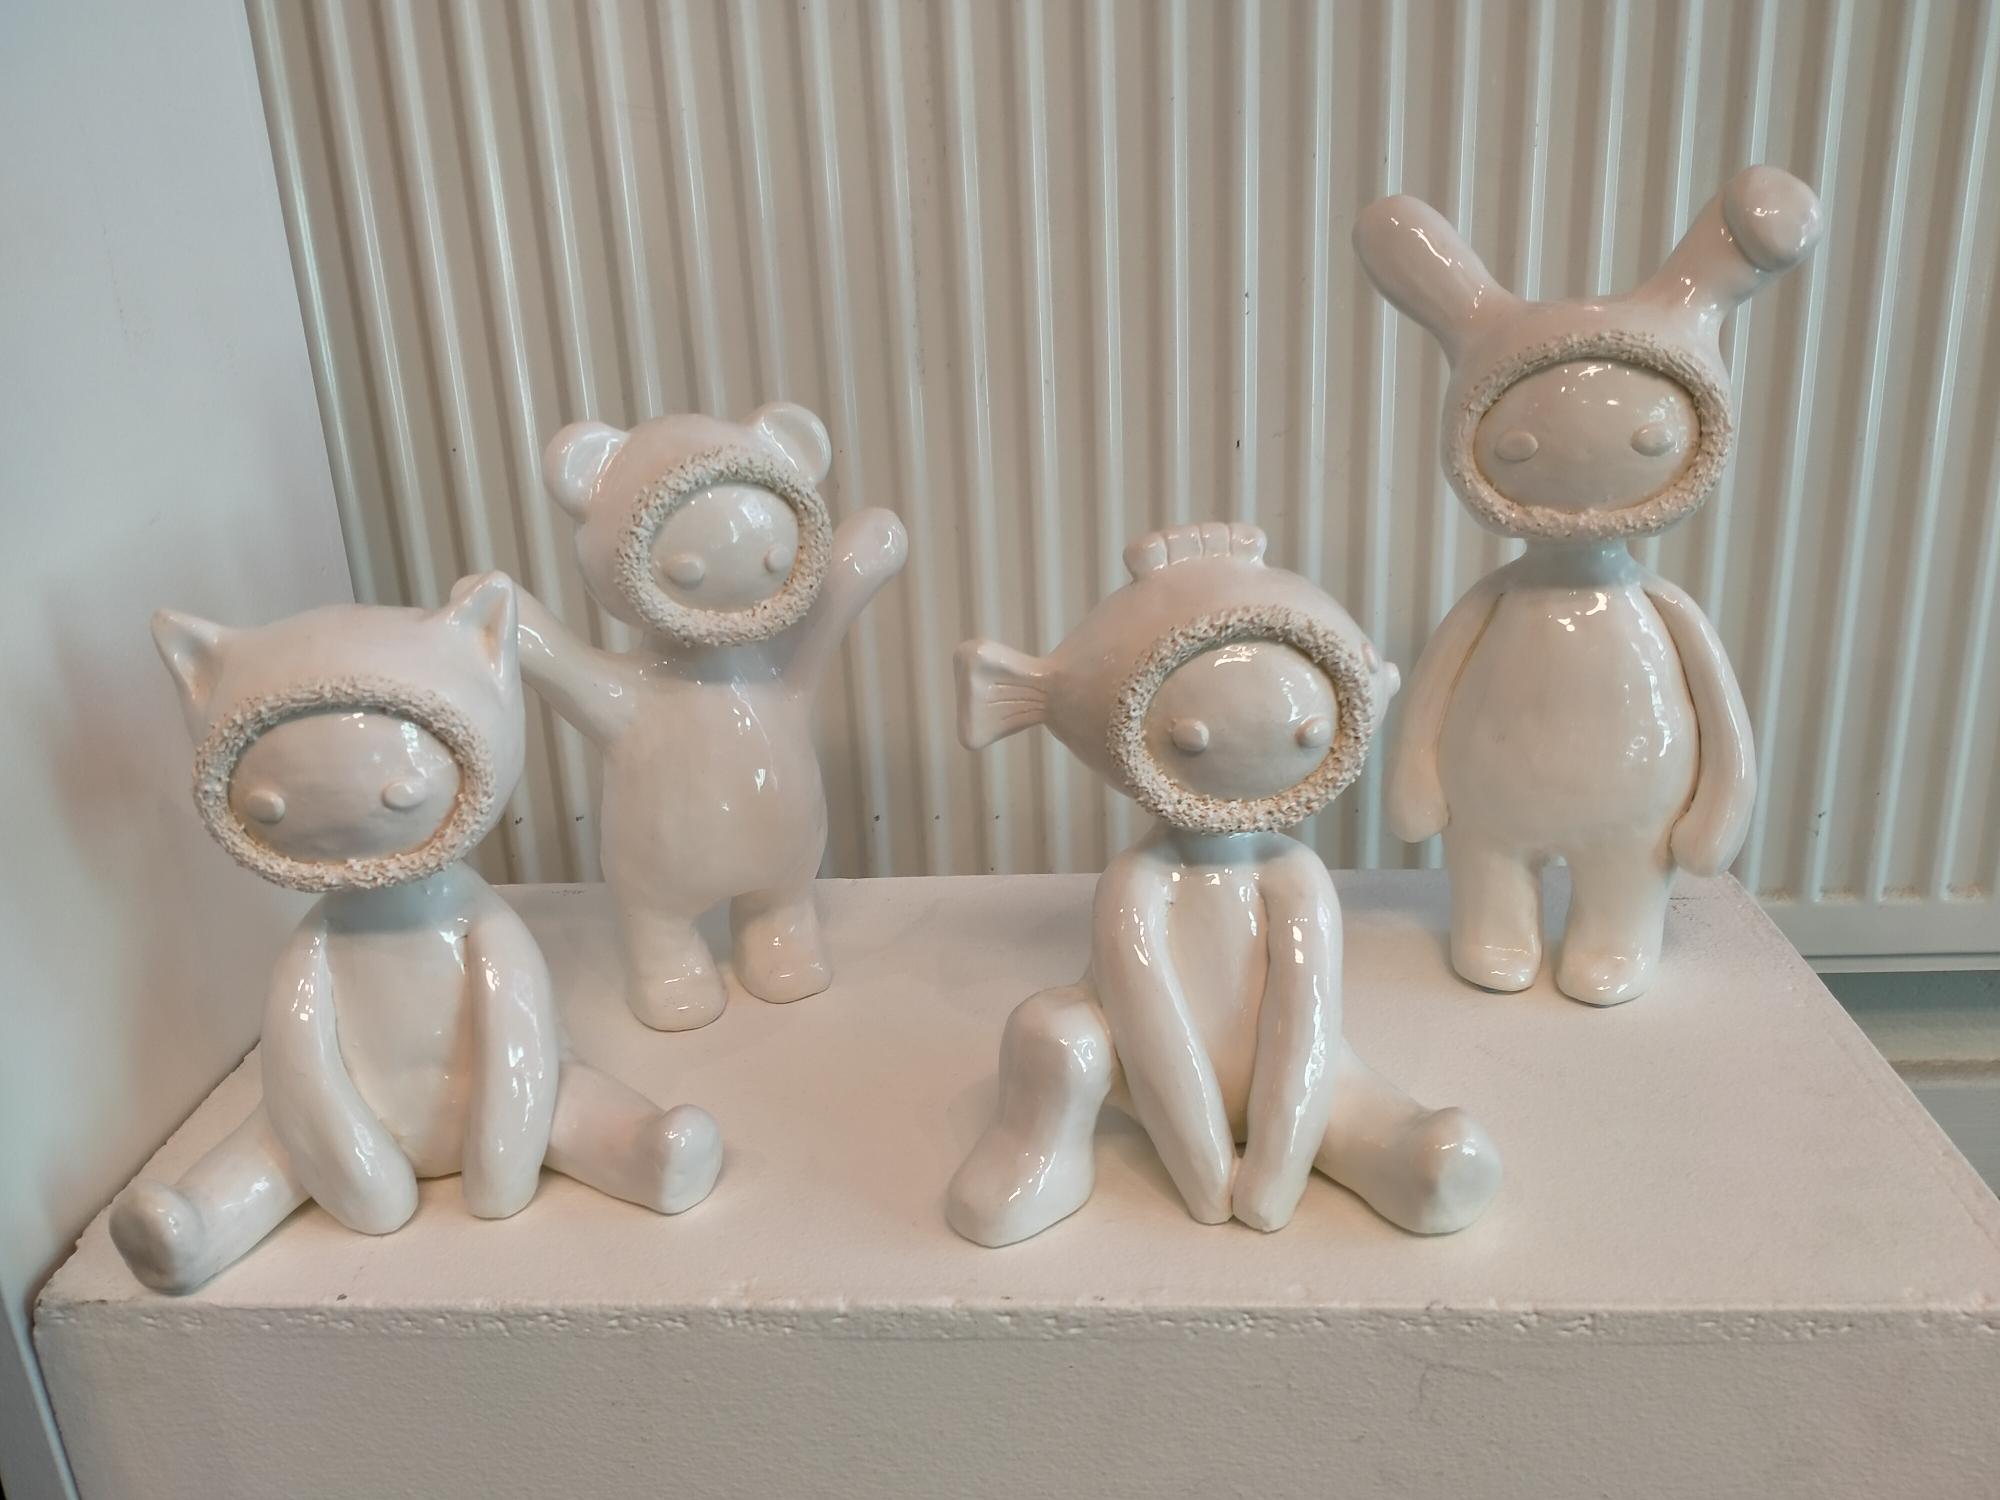 Art Exhibition 2022 - Figurines